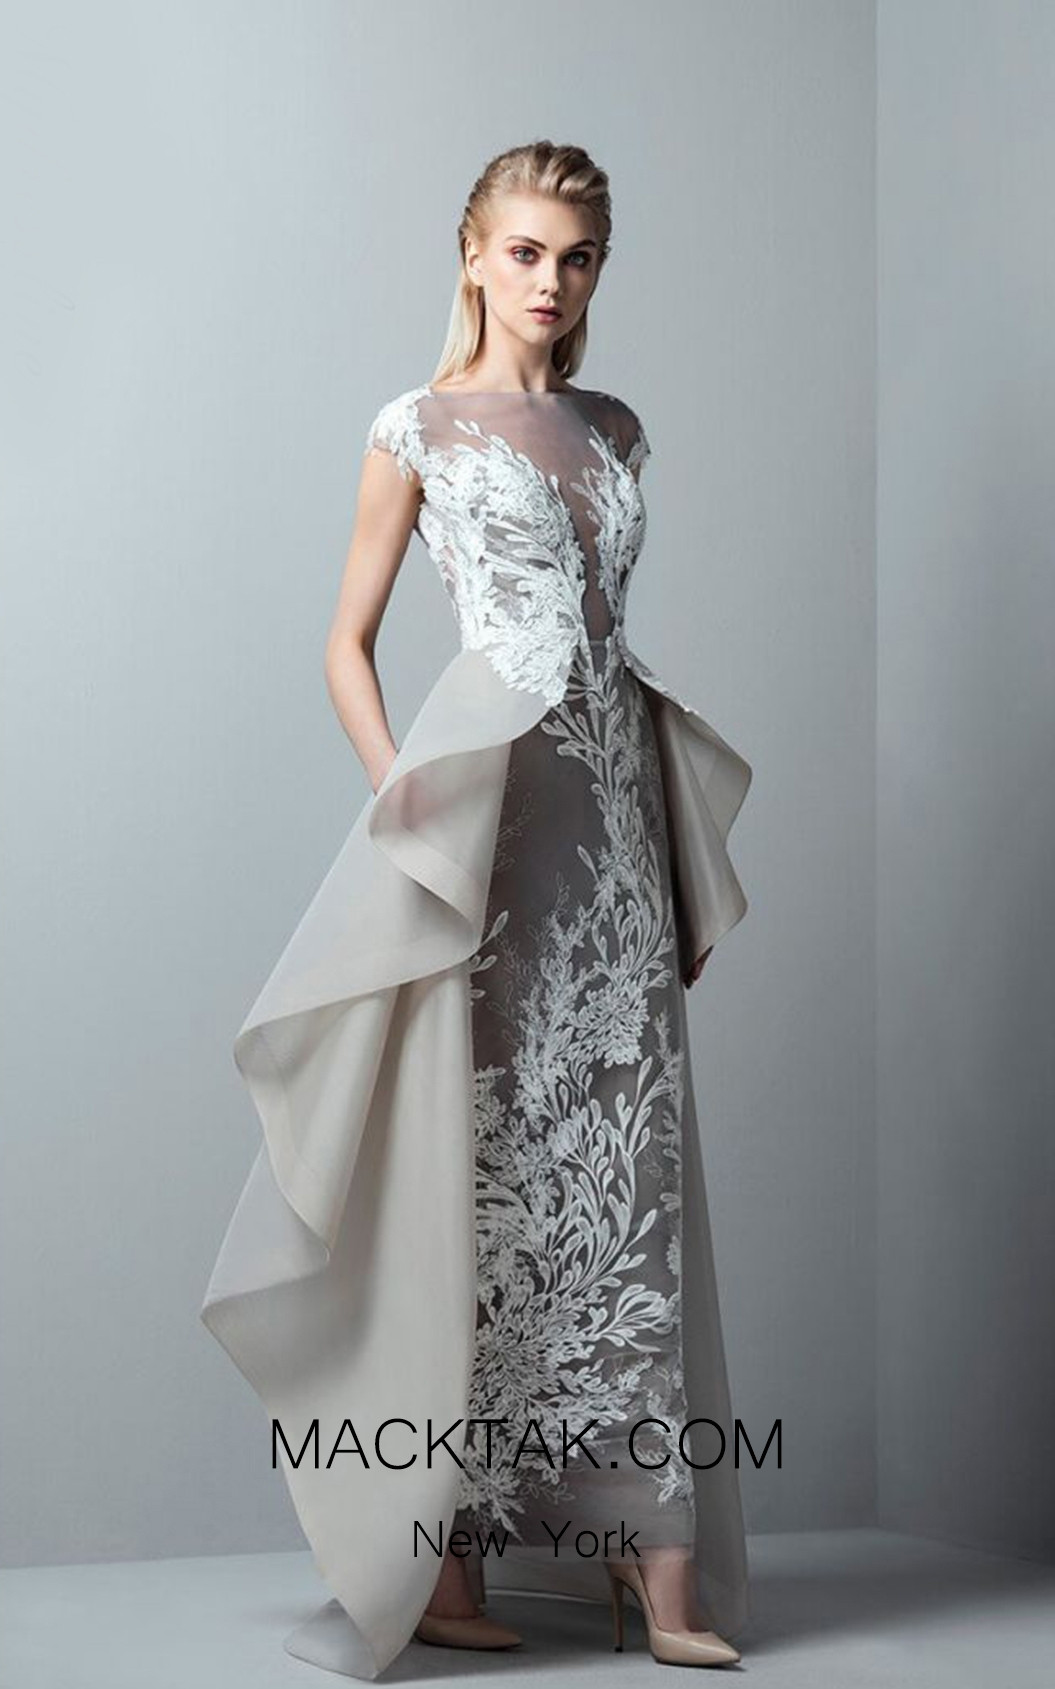 Saiid Kobeisy RE3369 Evening Dress - MackTak.com New York Online Store